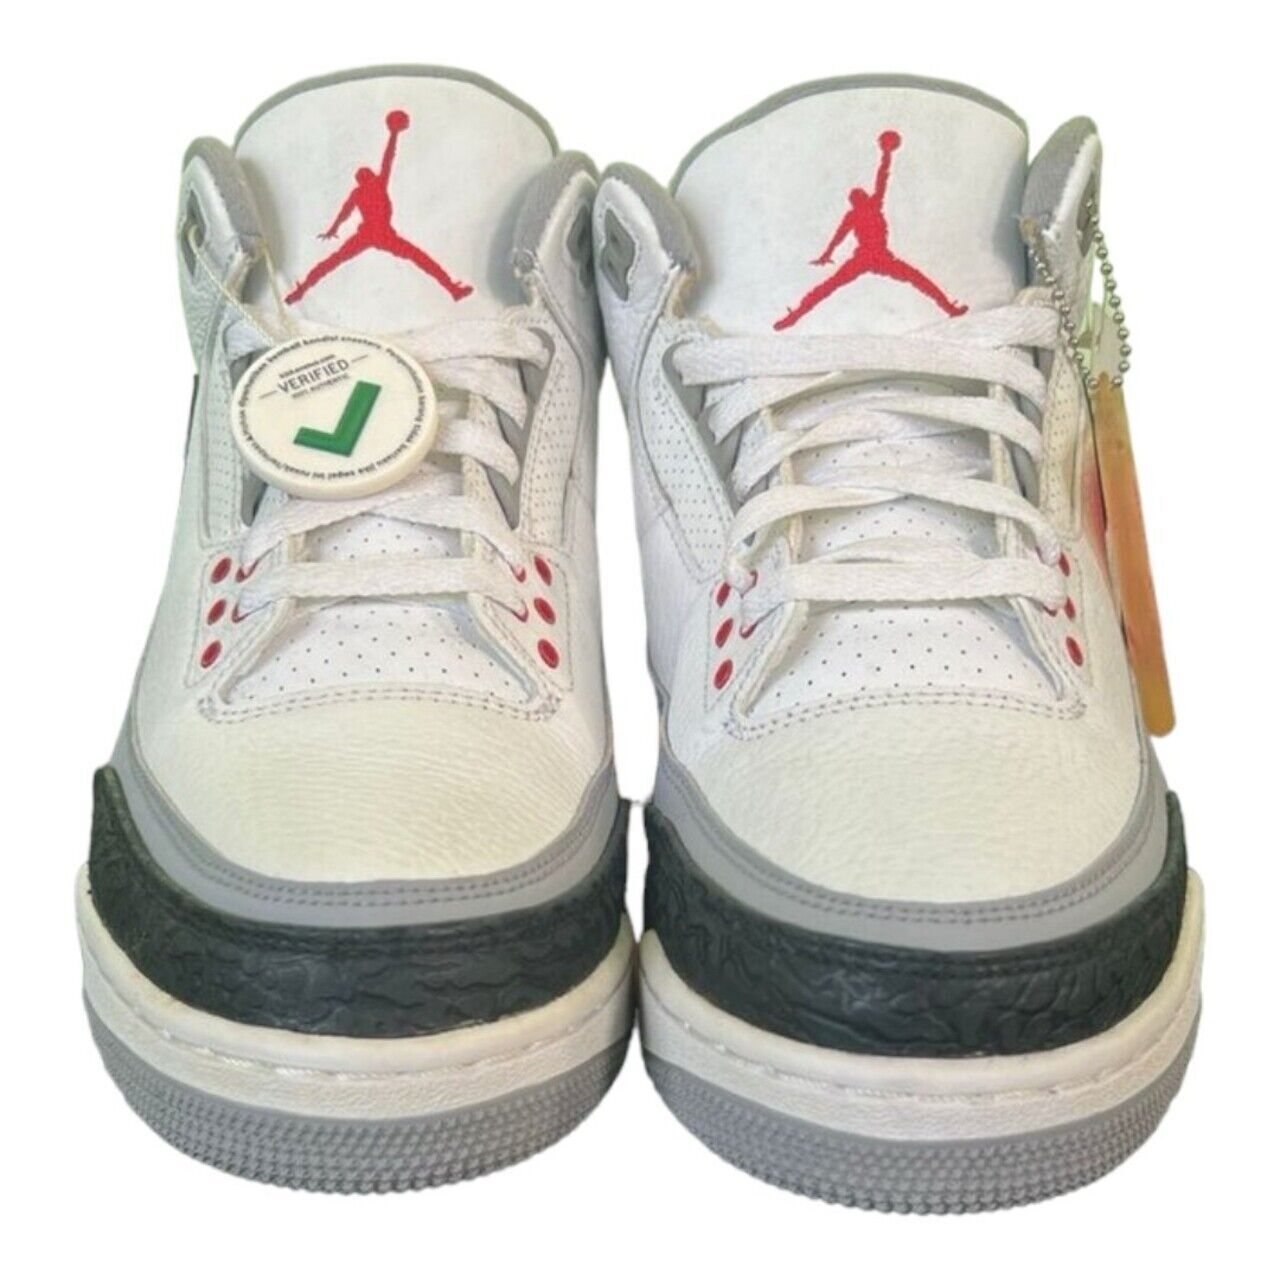 Air Jordan 3 Tinker Hatfield Multicolour Sneakers